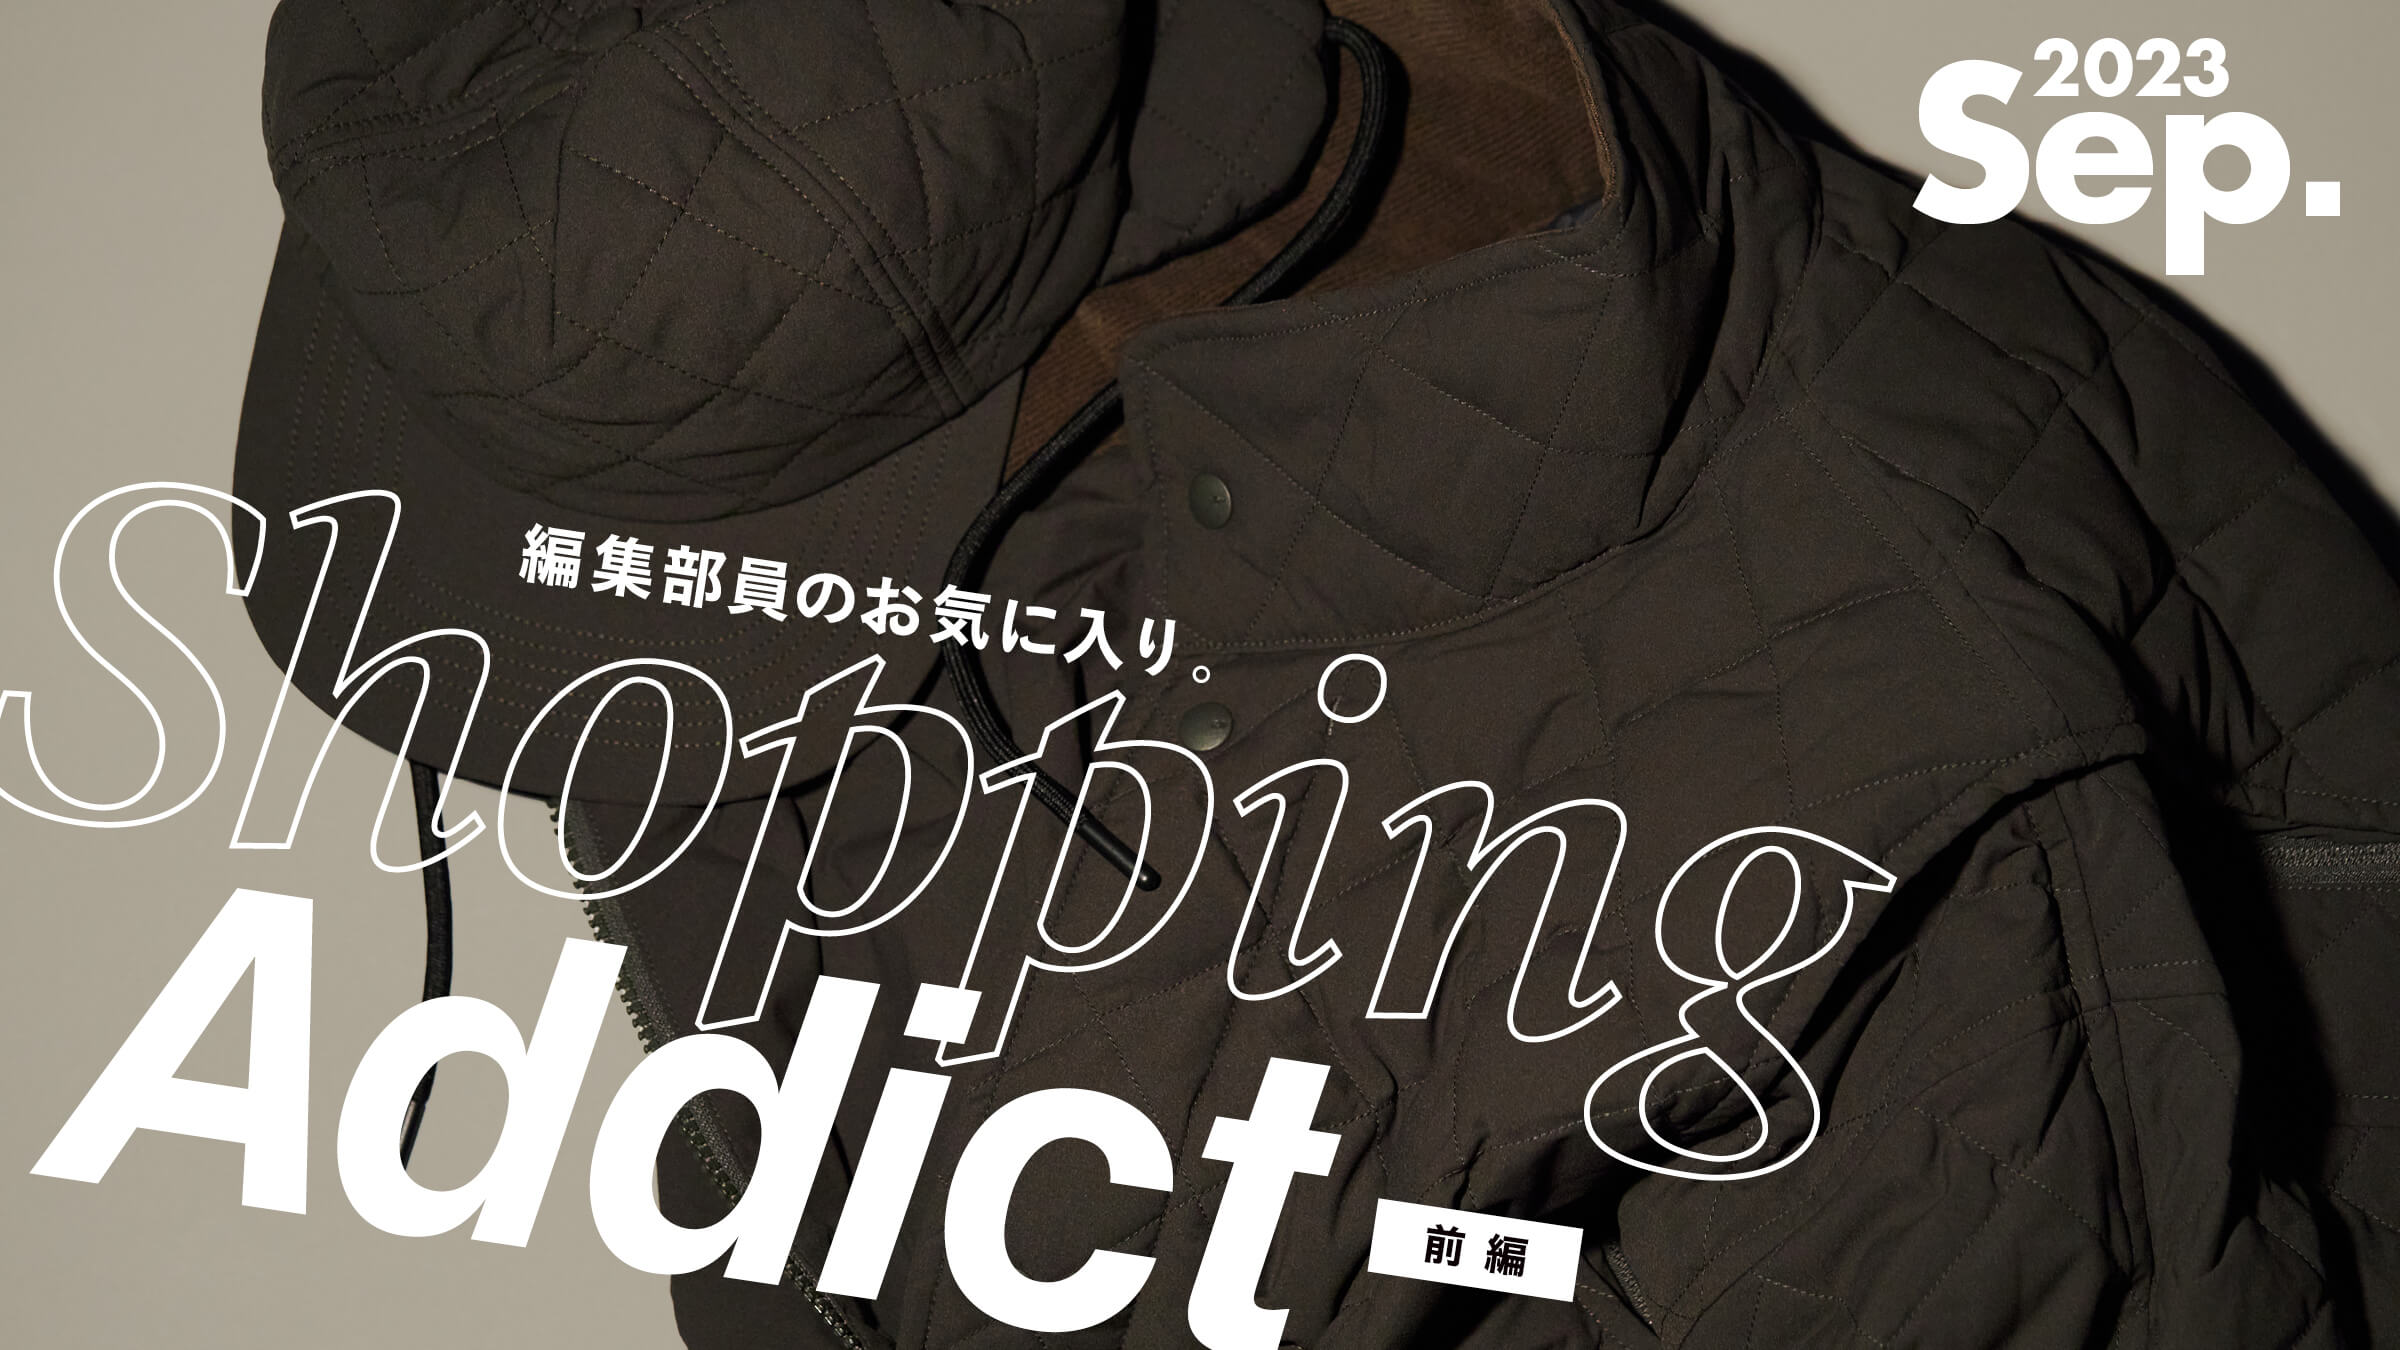 Shopping Addict 2023 Sep. 〜編集部員のお気に入り〜 前編